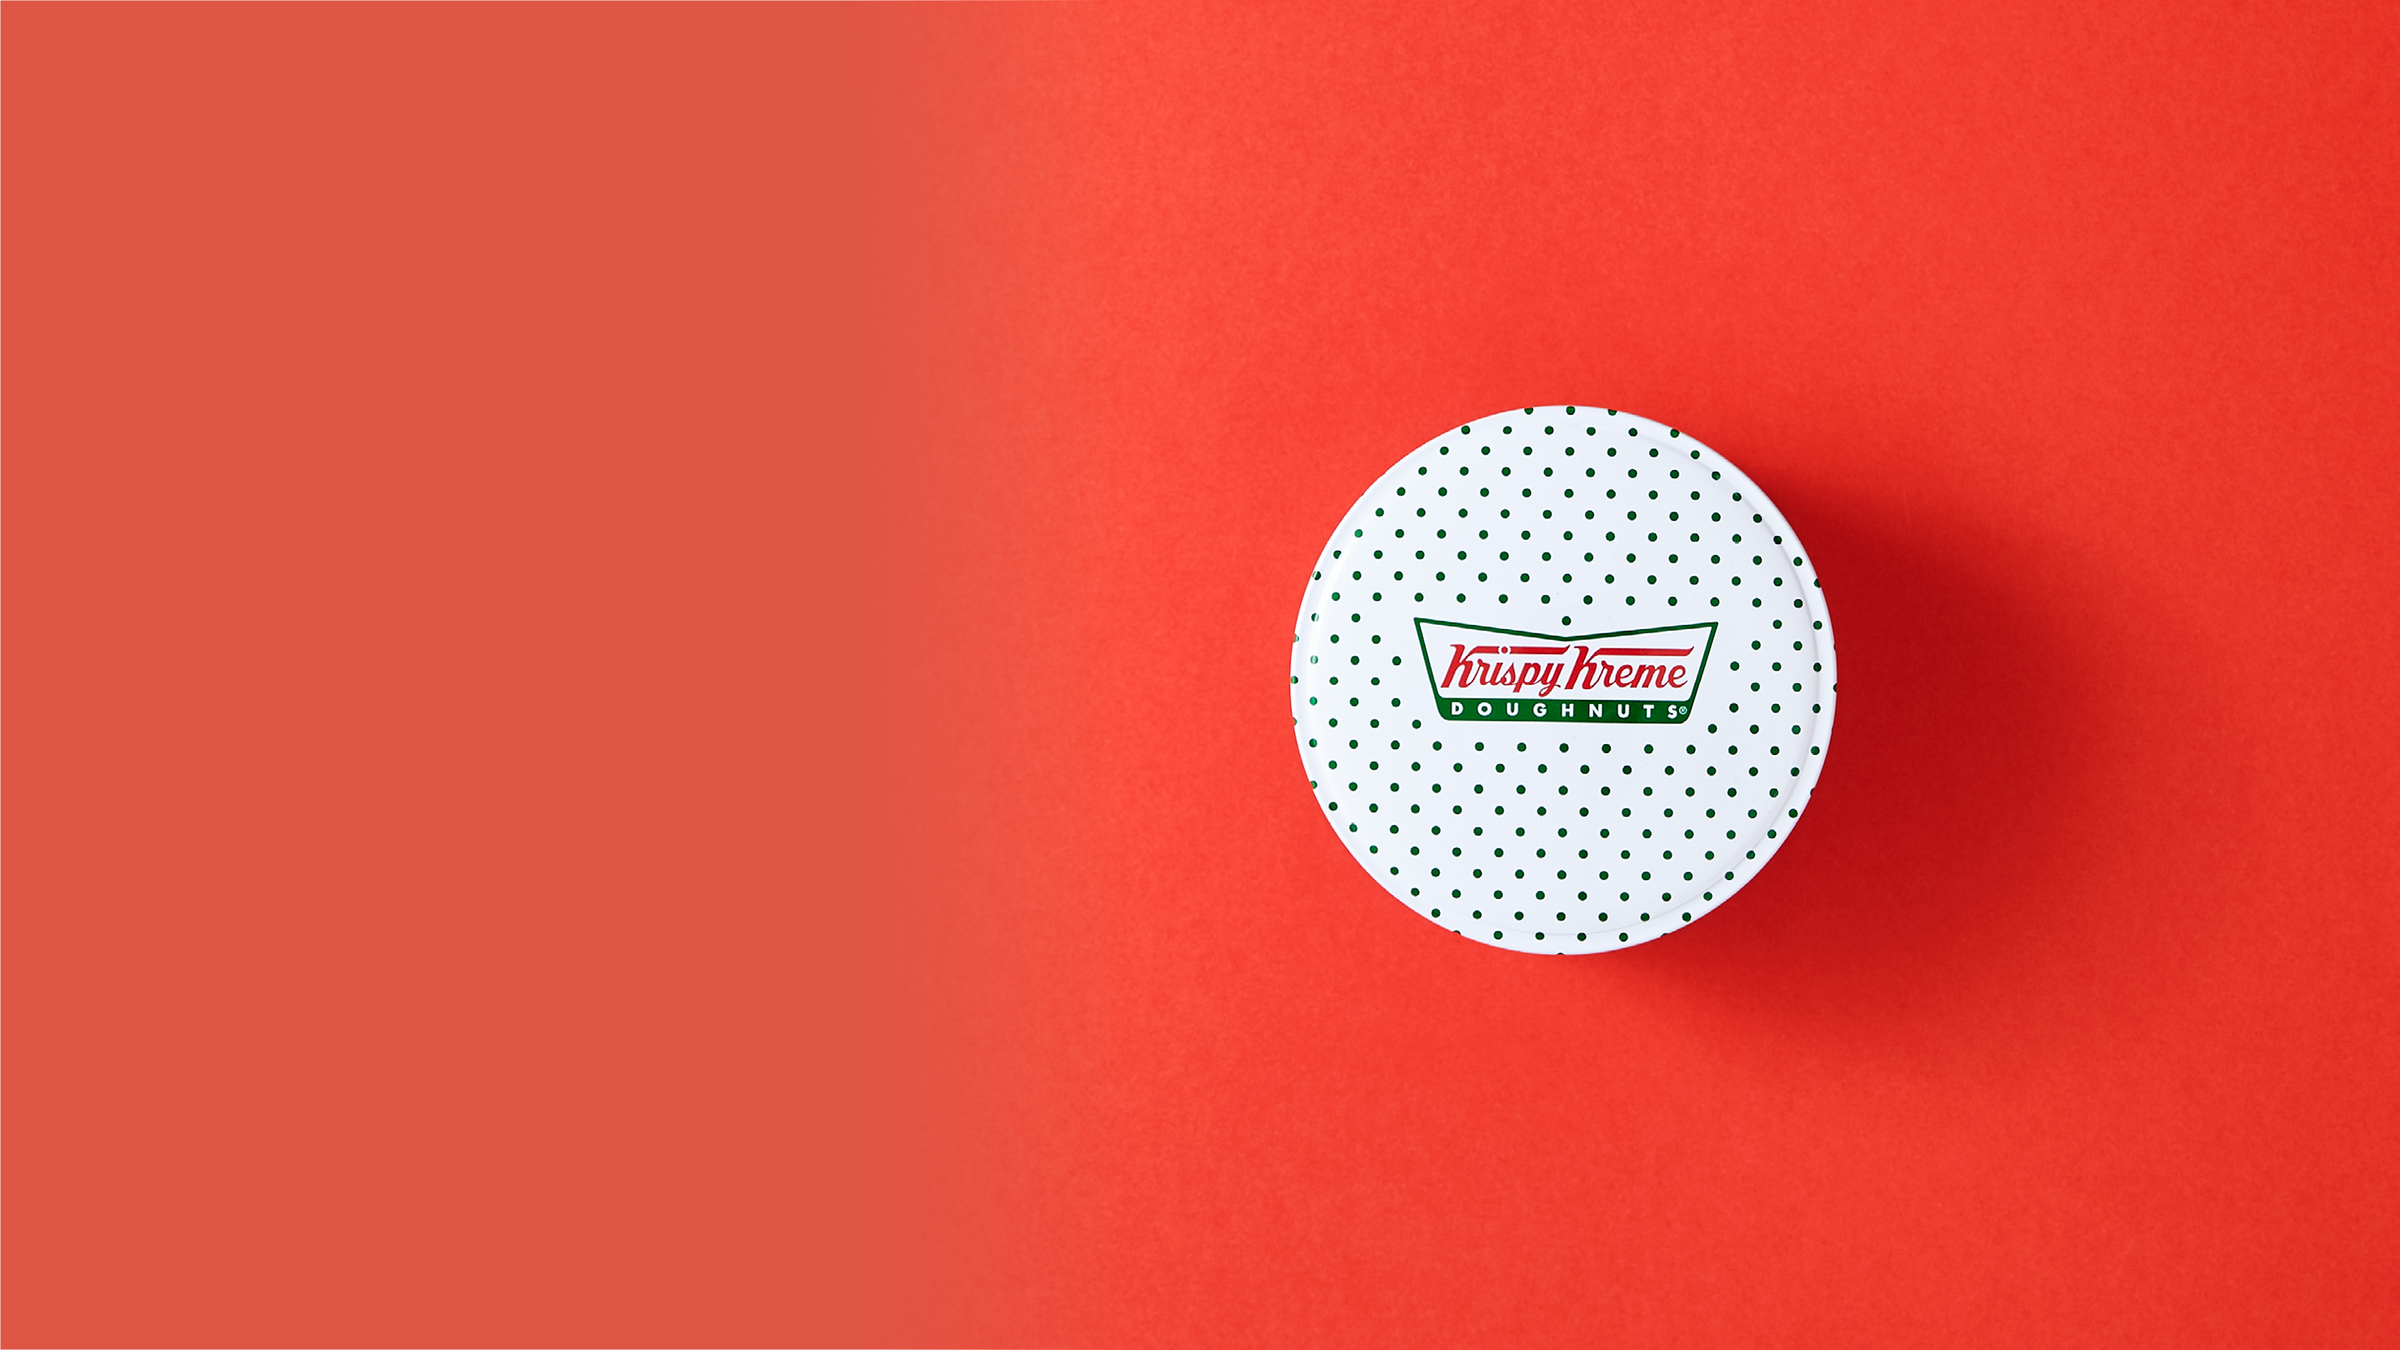 A Krispy Kreme doughnut tin packaging against a red background.